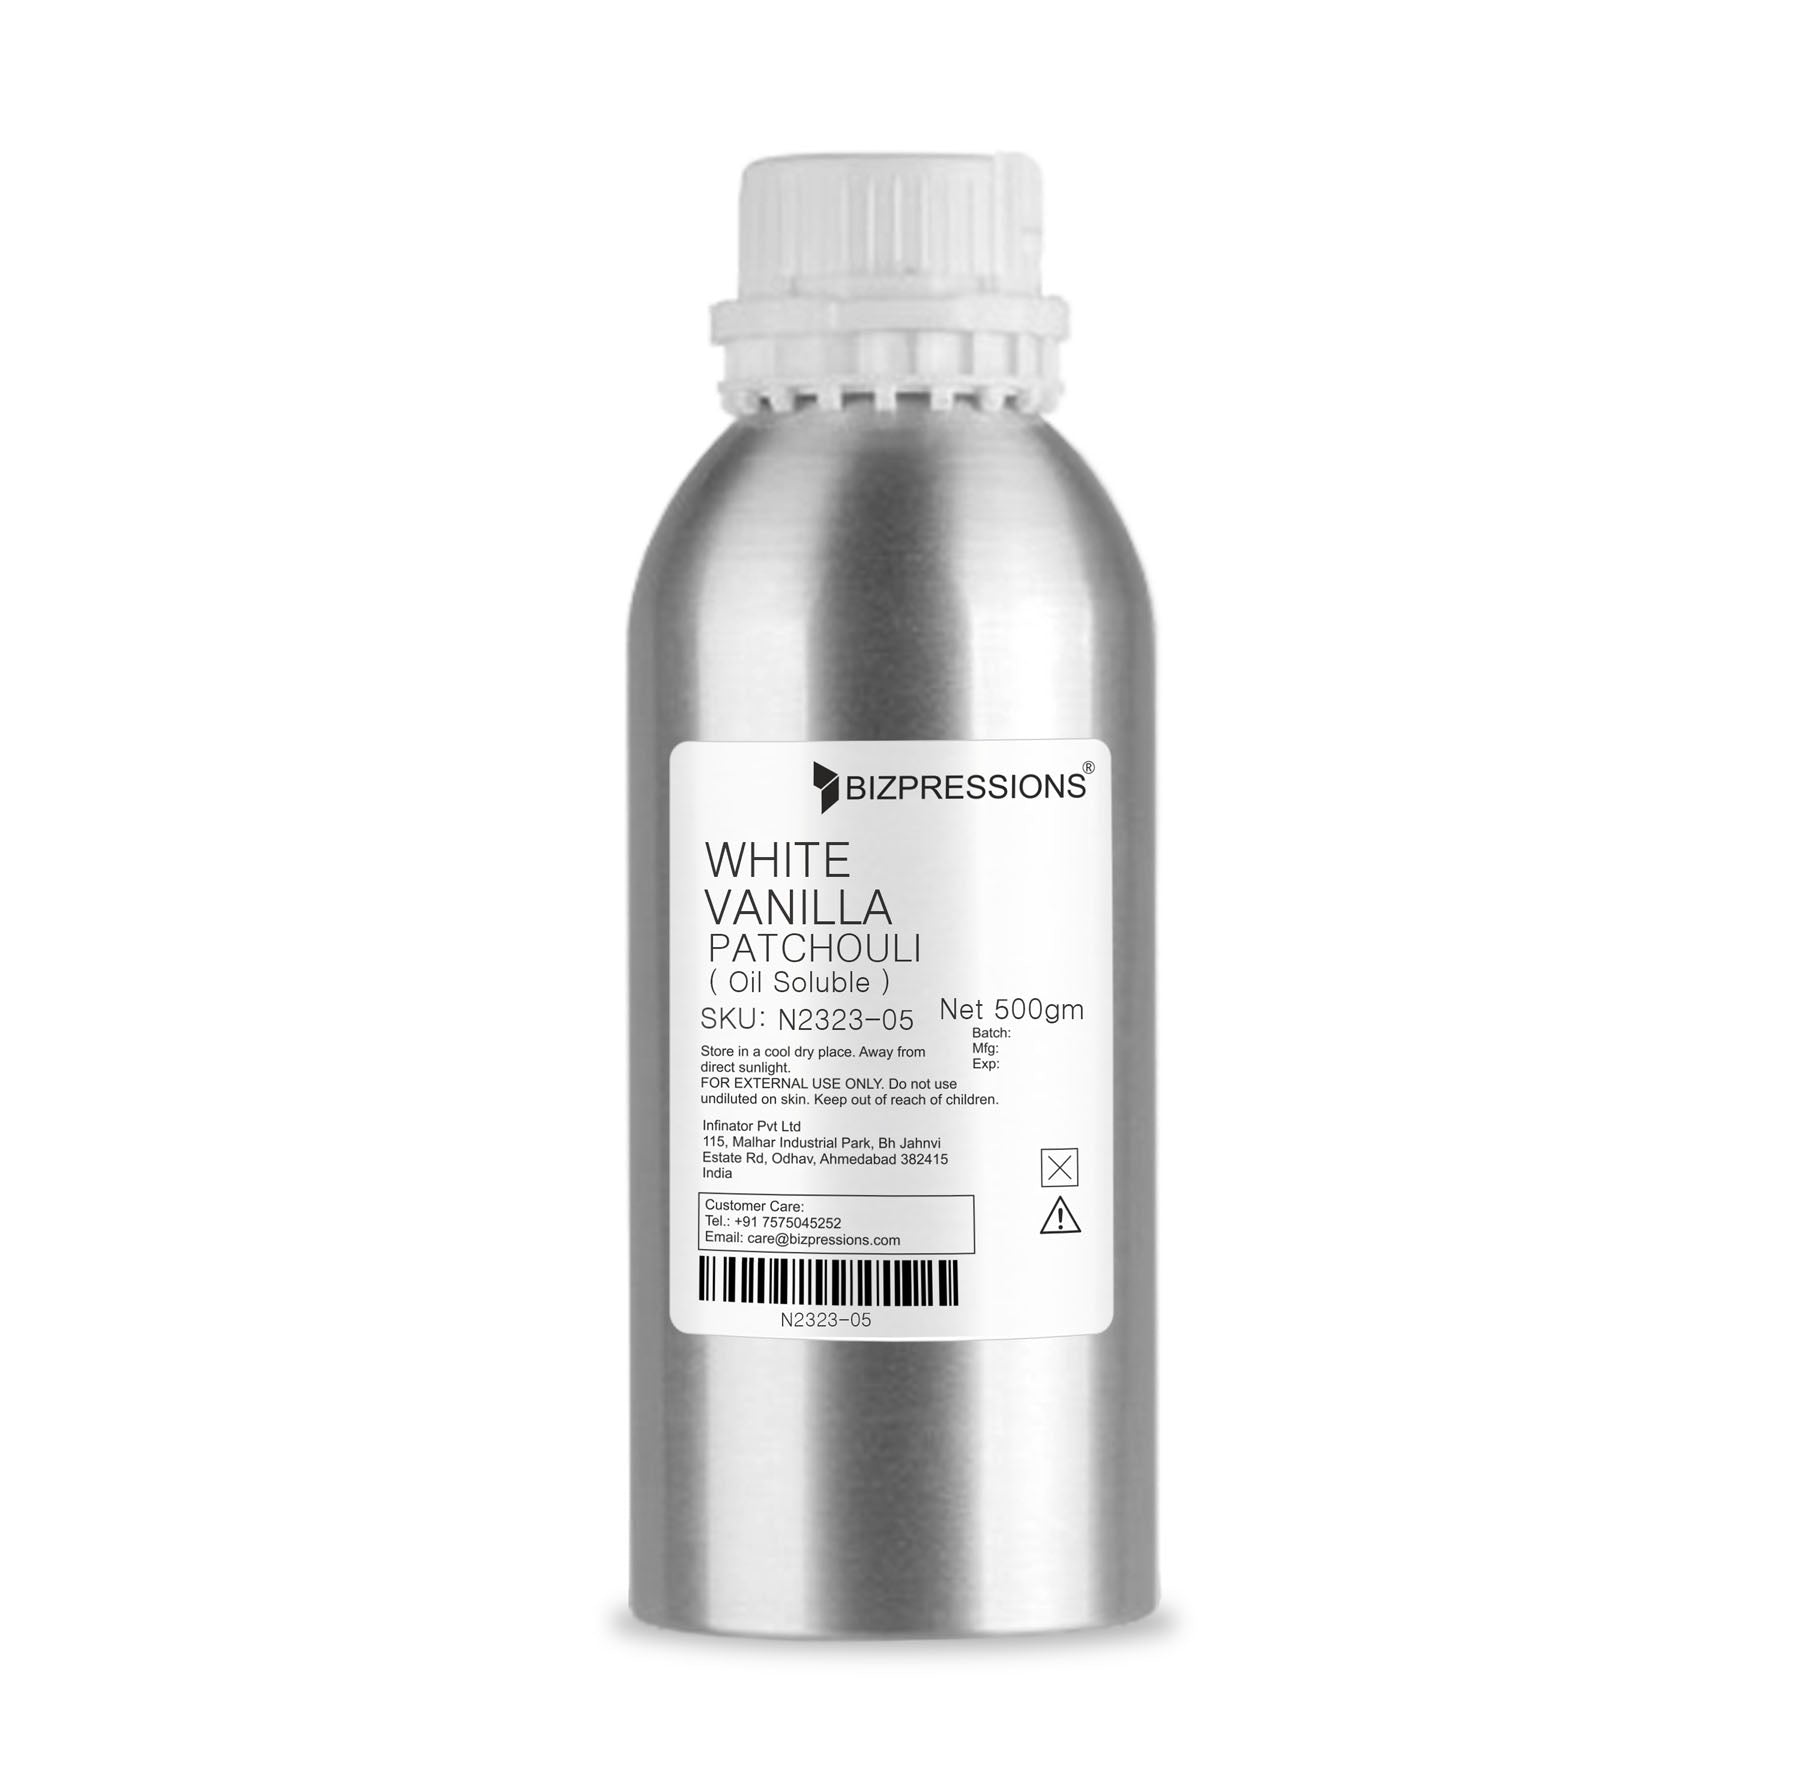 WHITE VANILLA PATCHOULI - Fragrance ( Oil Soluble ) - 500 gm